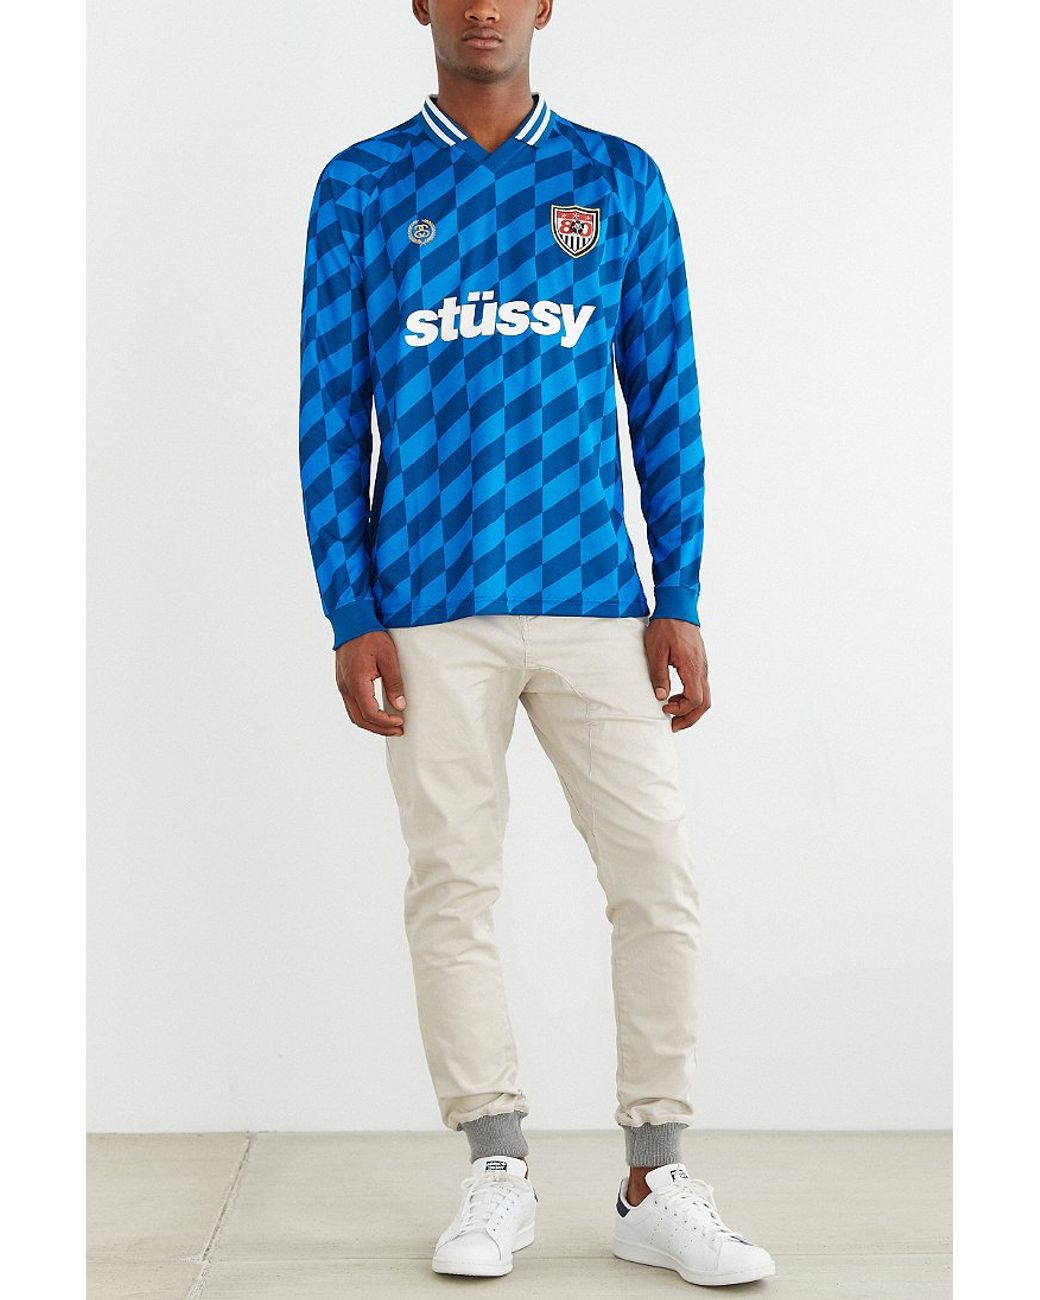 Stussy Soccer Jersey in Blue for Men